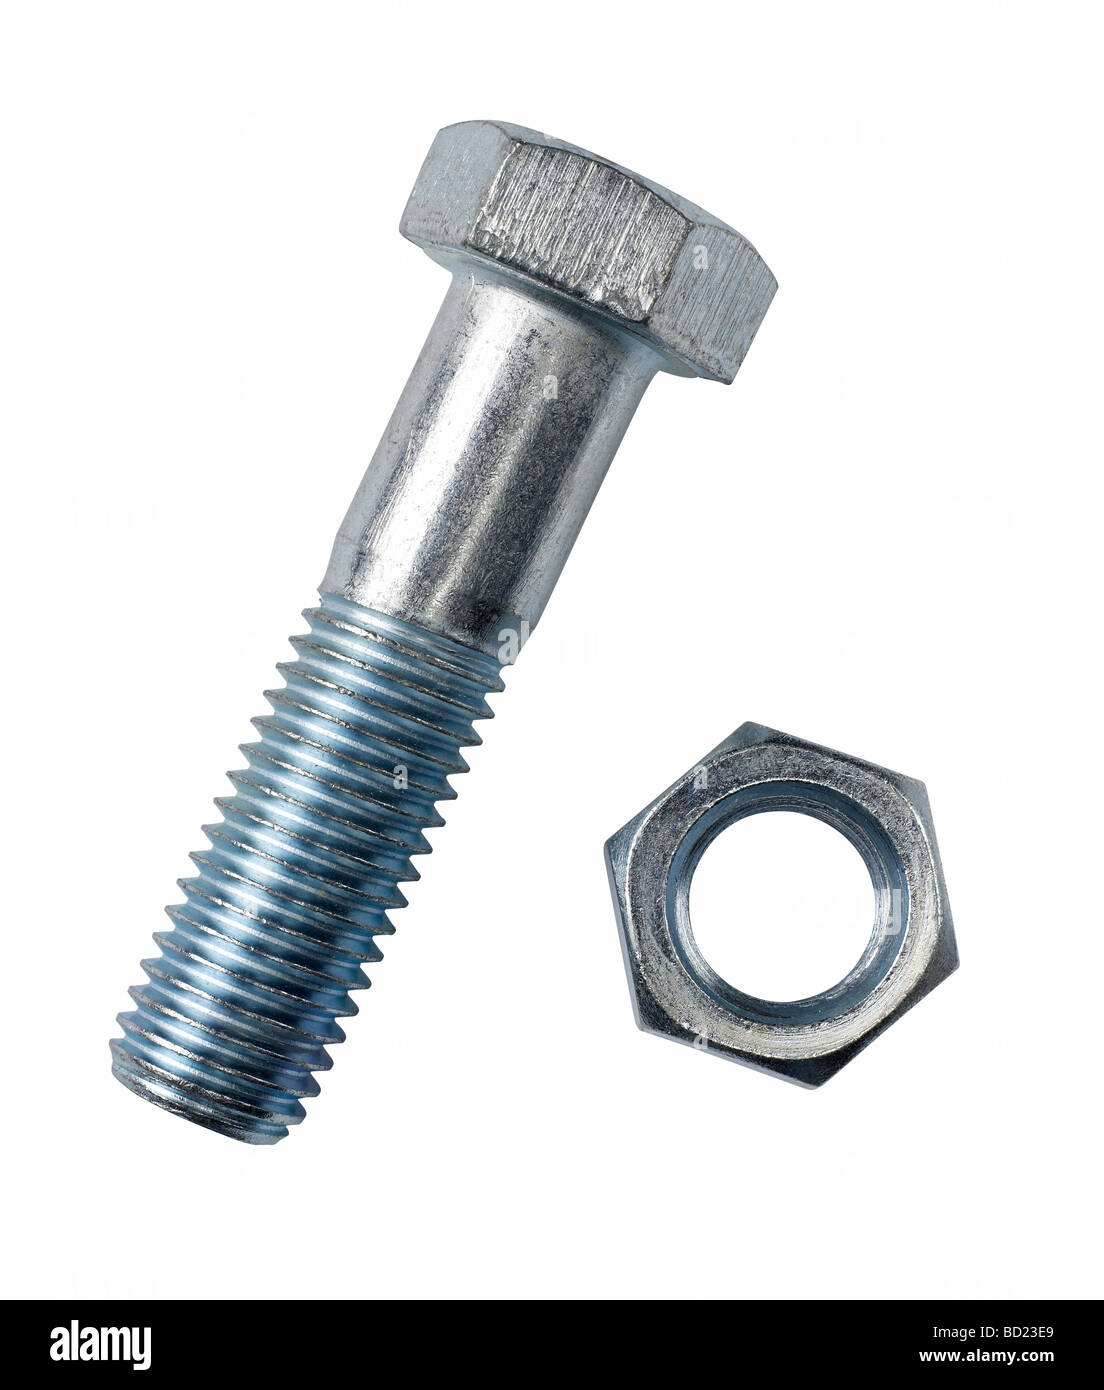 Nut and bolt hardware Stock Photo